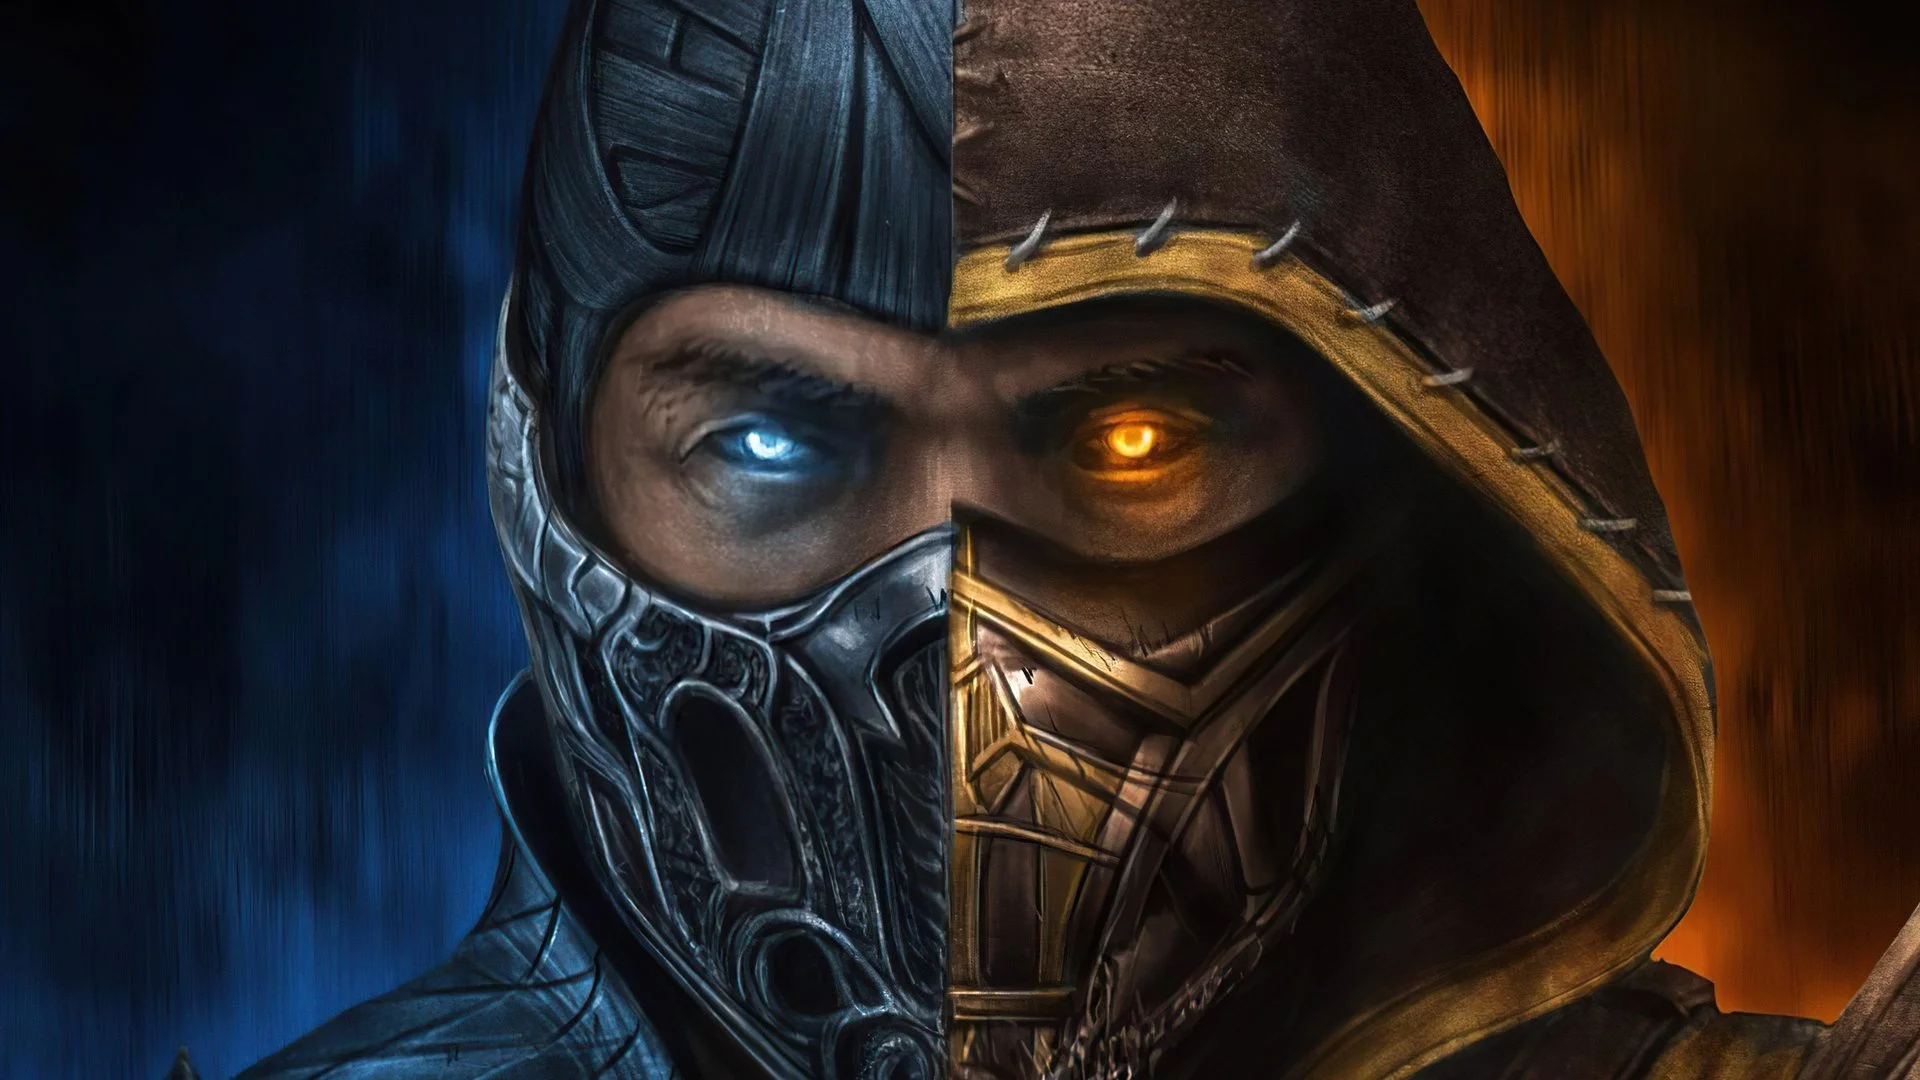 Rumors: Mortal Kombat 12 will be announced this week